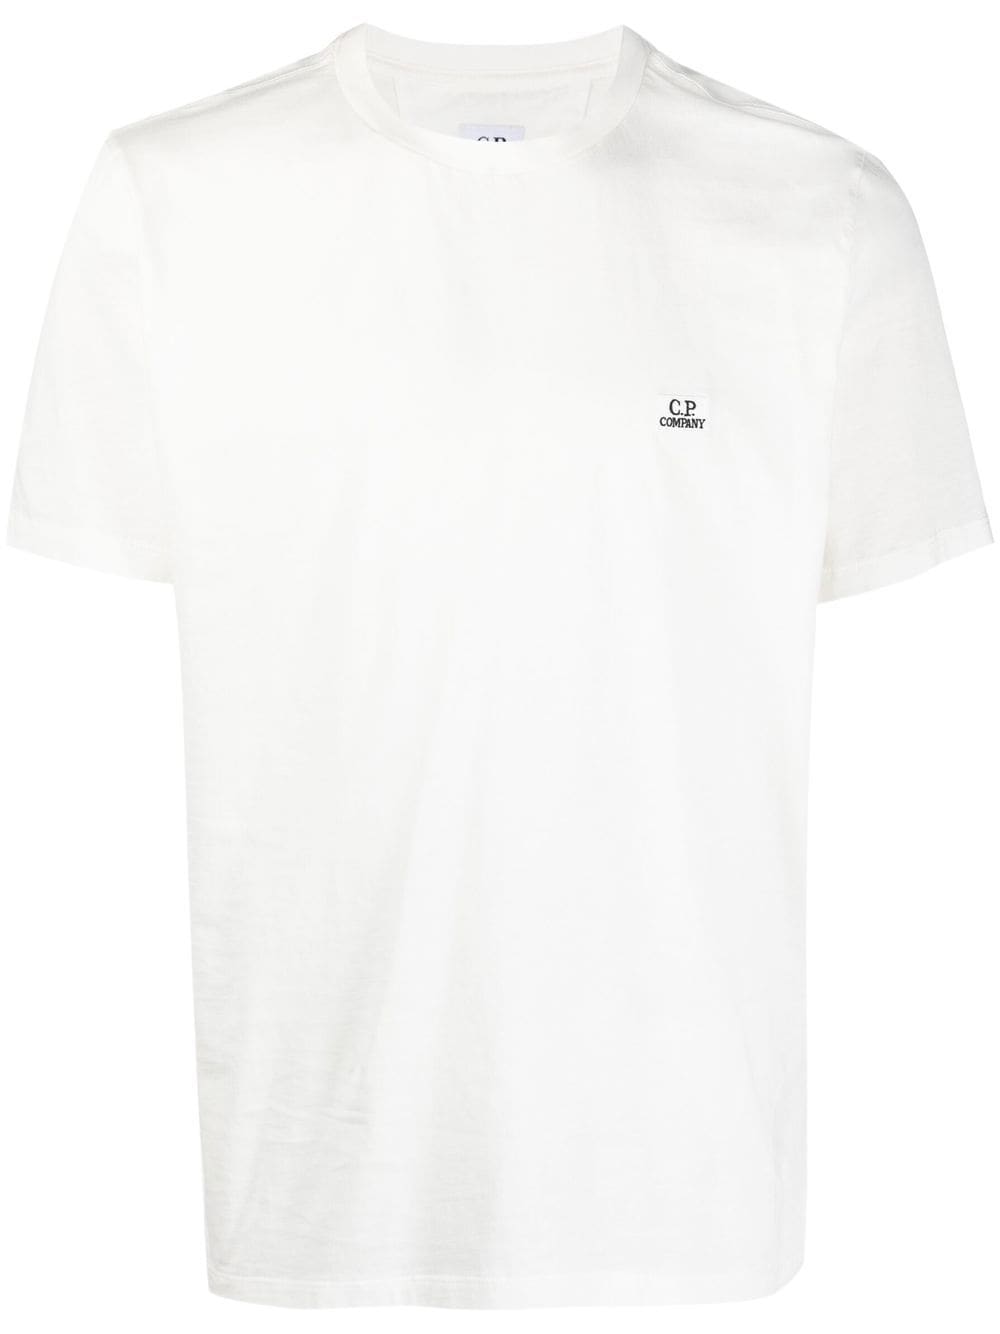 C.P. Company -T-shirt blanc 30/1 Jersey - Lothaire